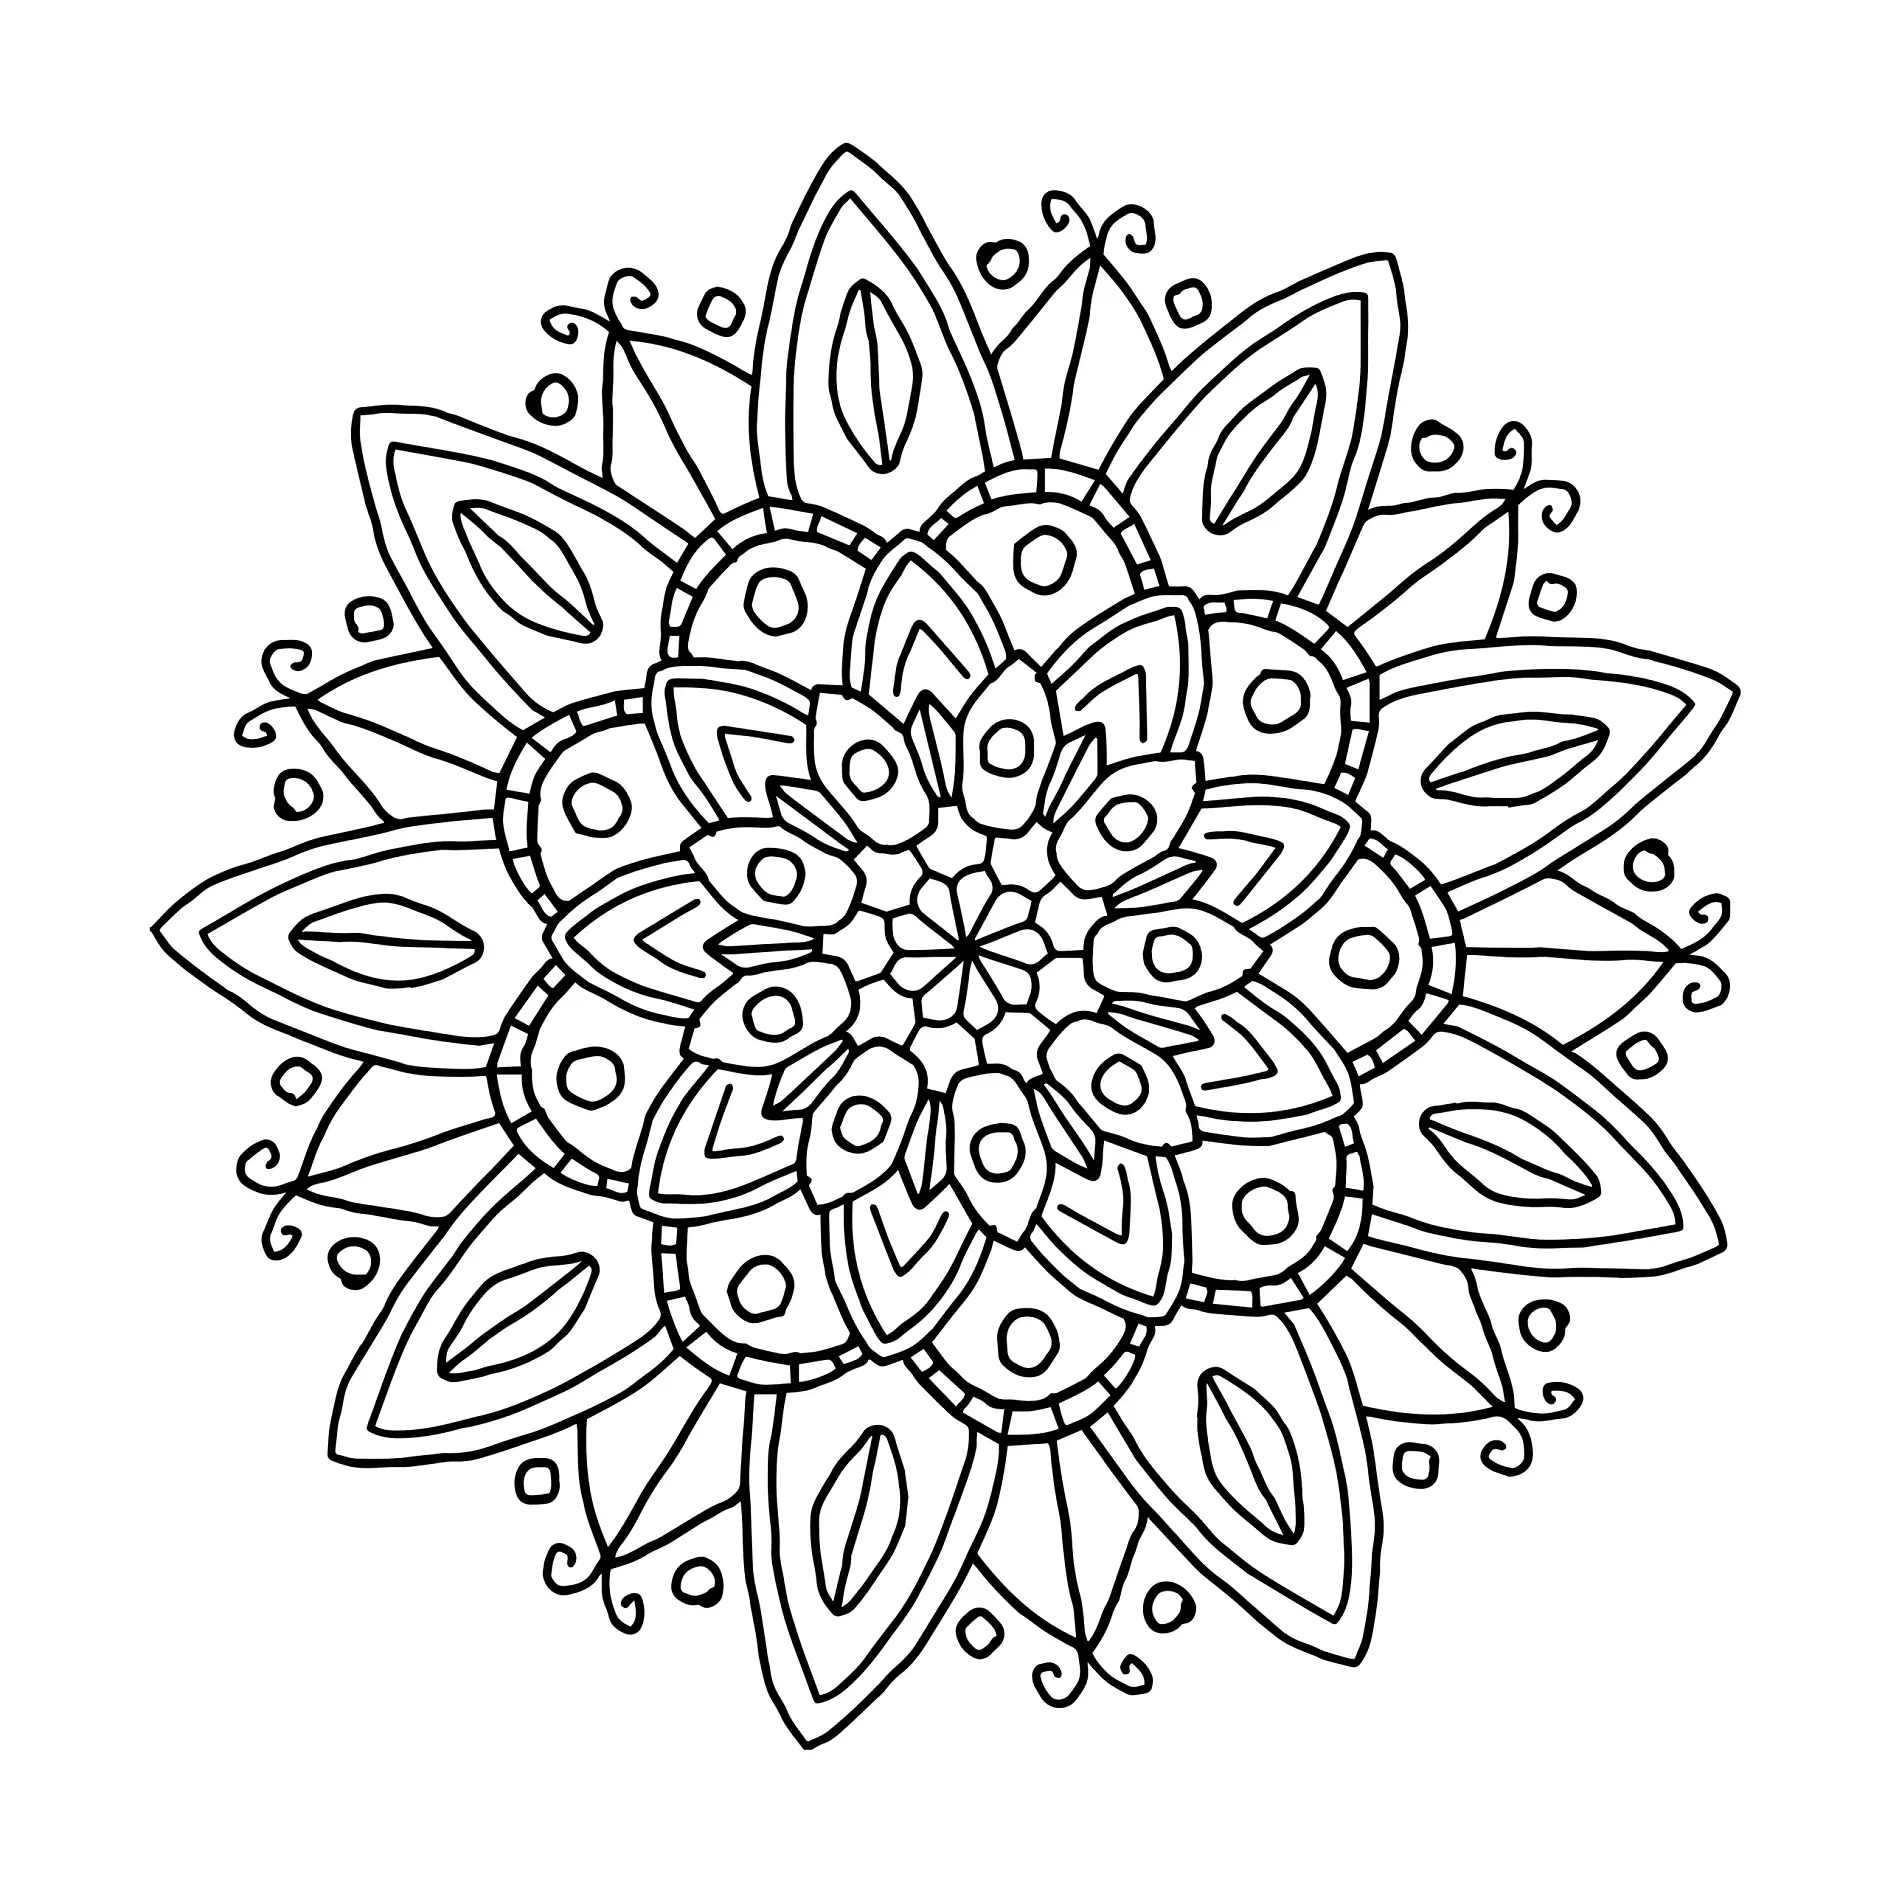 Ausmalbild Mandala mit Blüten und Blättern